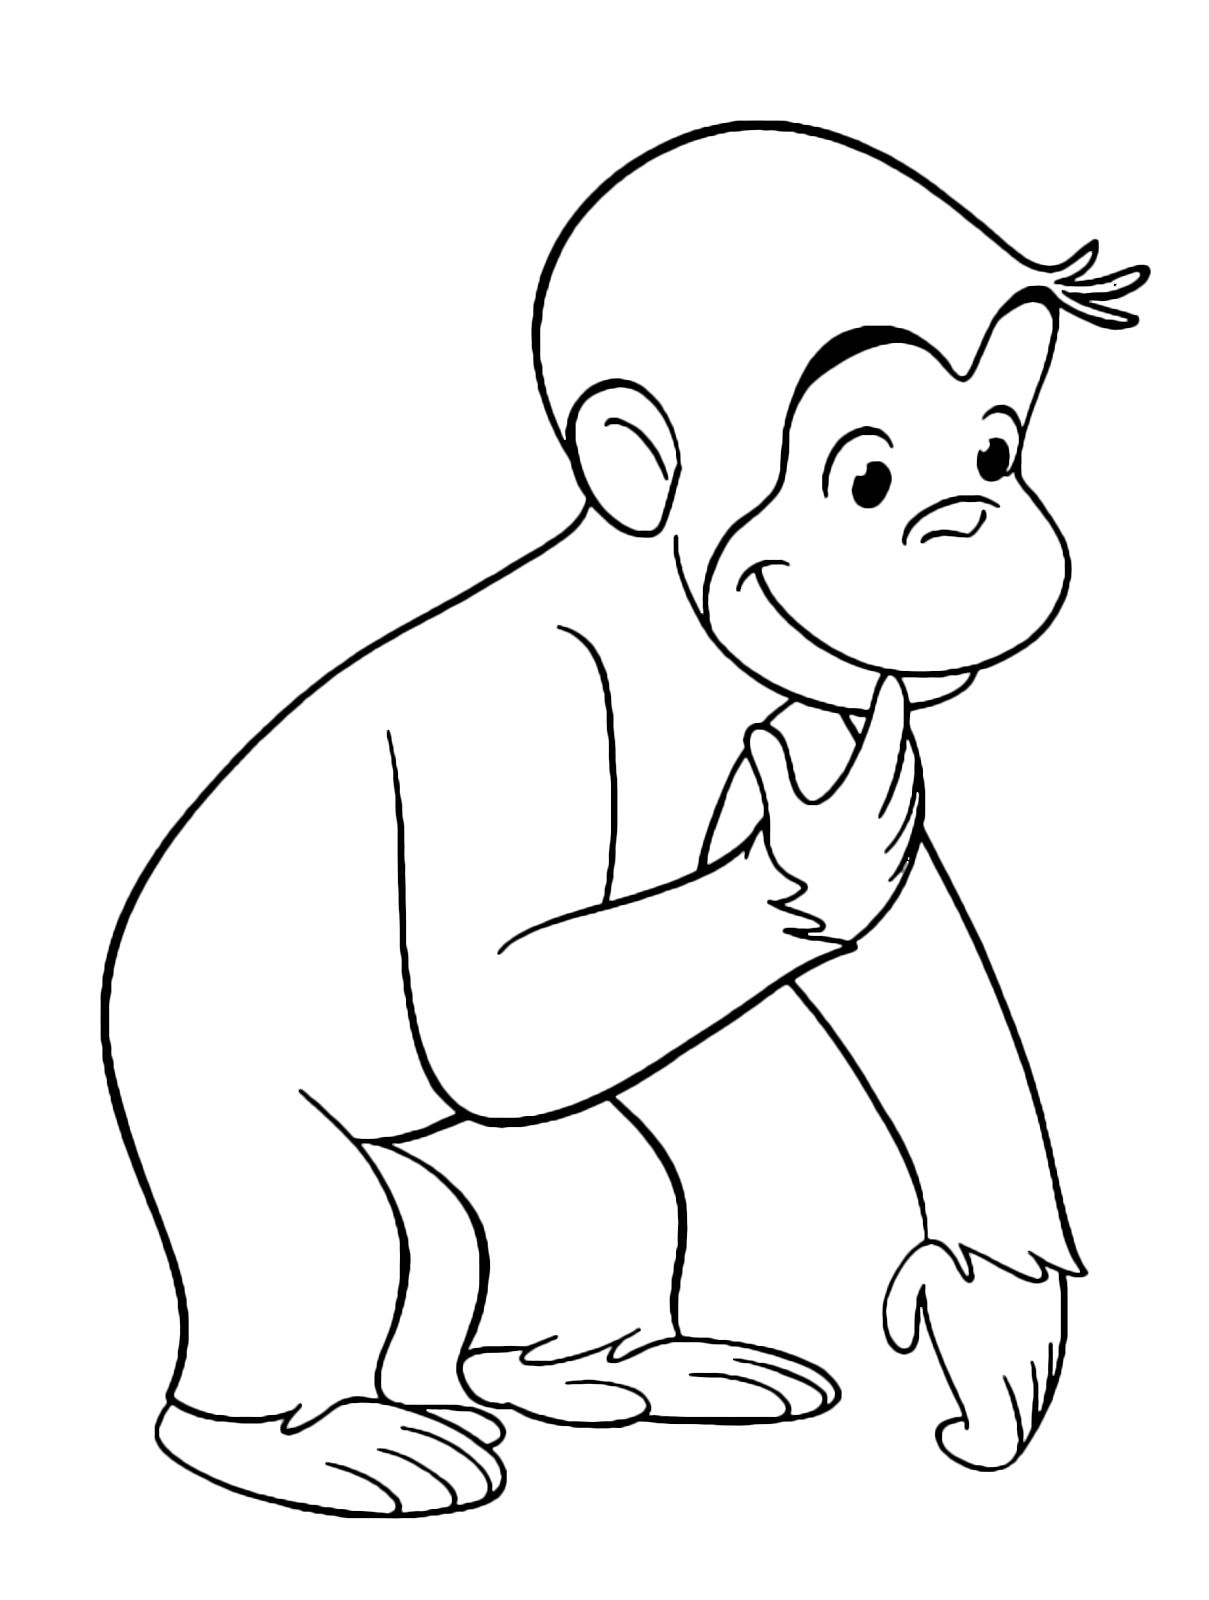 george la scimmietta osserva incuriosita